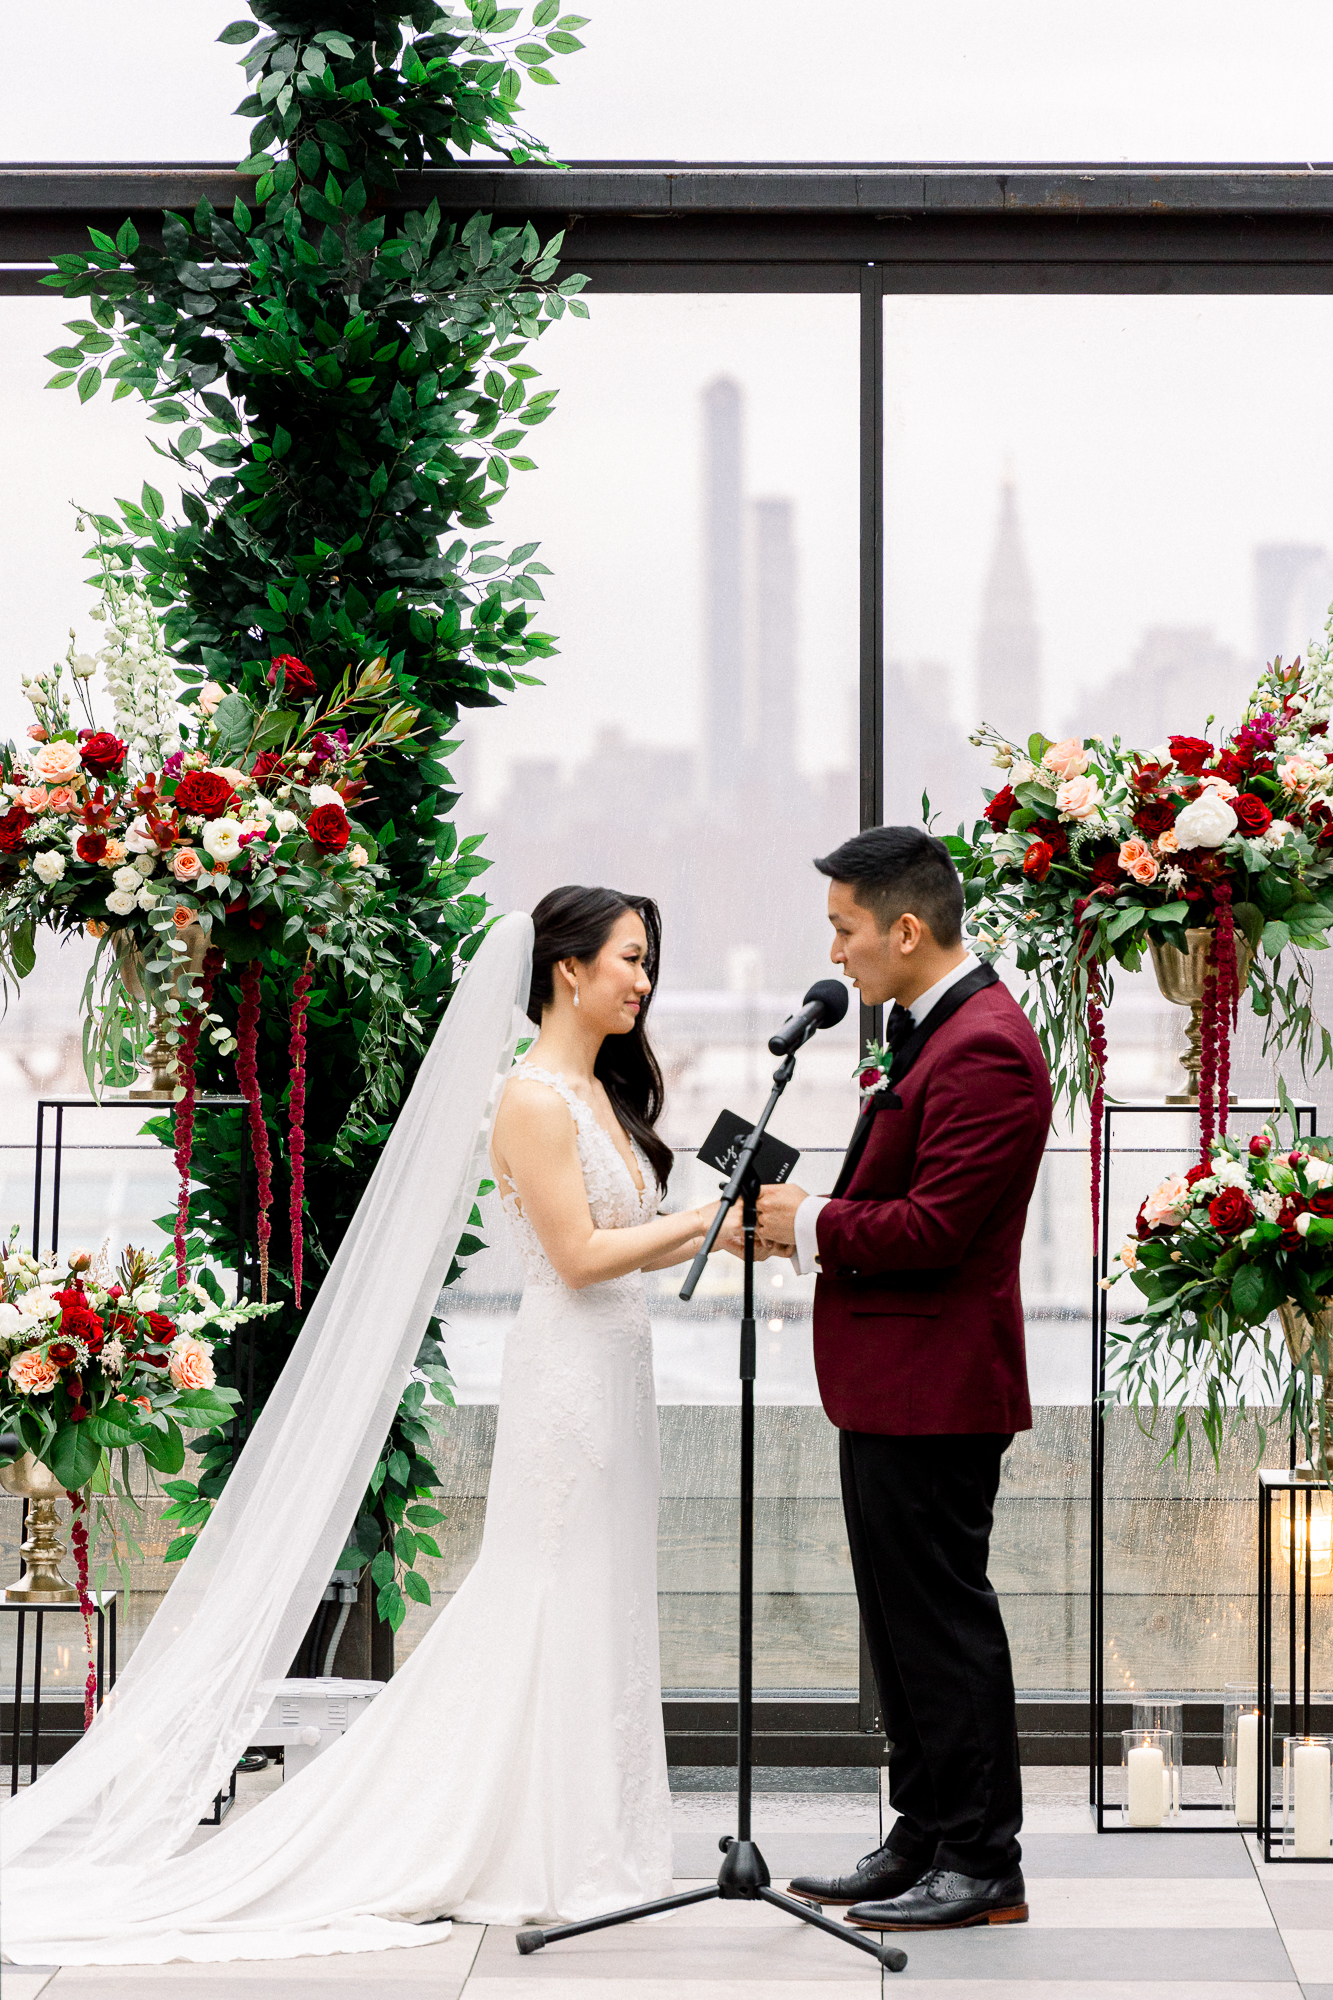 Excellent New York wedding photographers